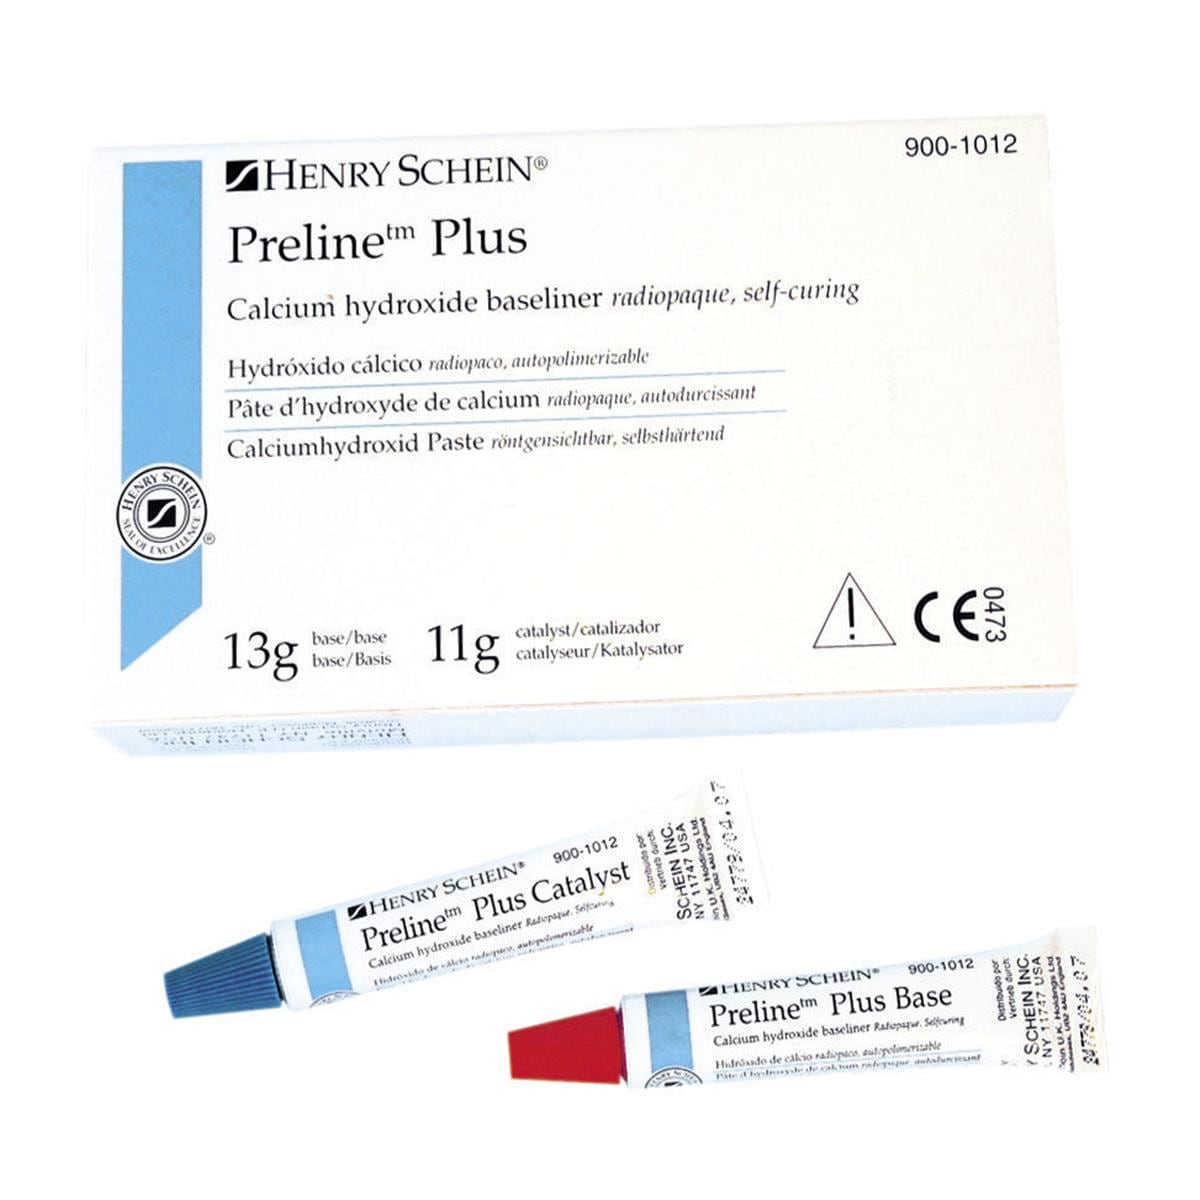 Preline Plus - Verpakking,13 g basis en 11 g katalysator